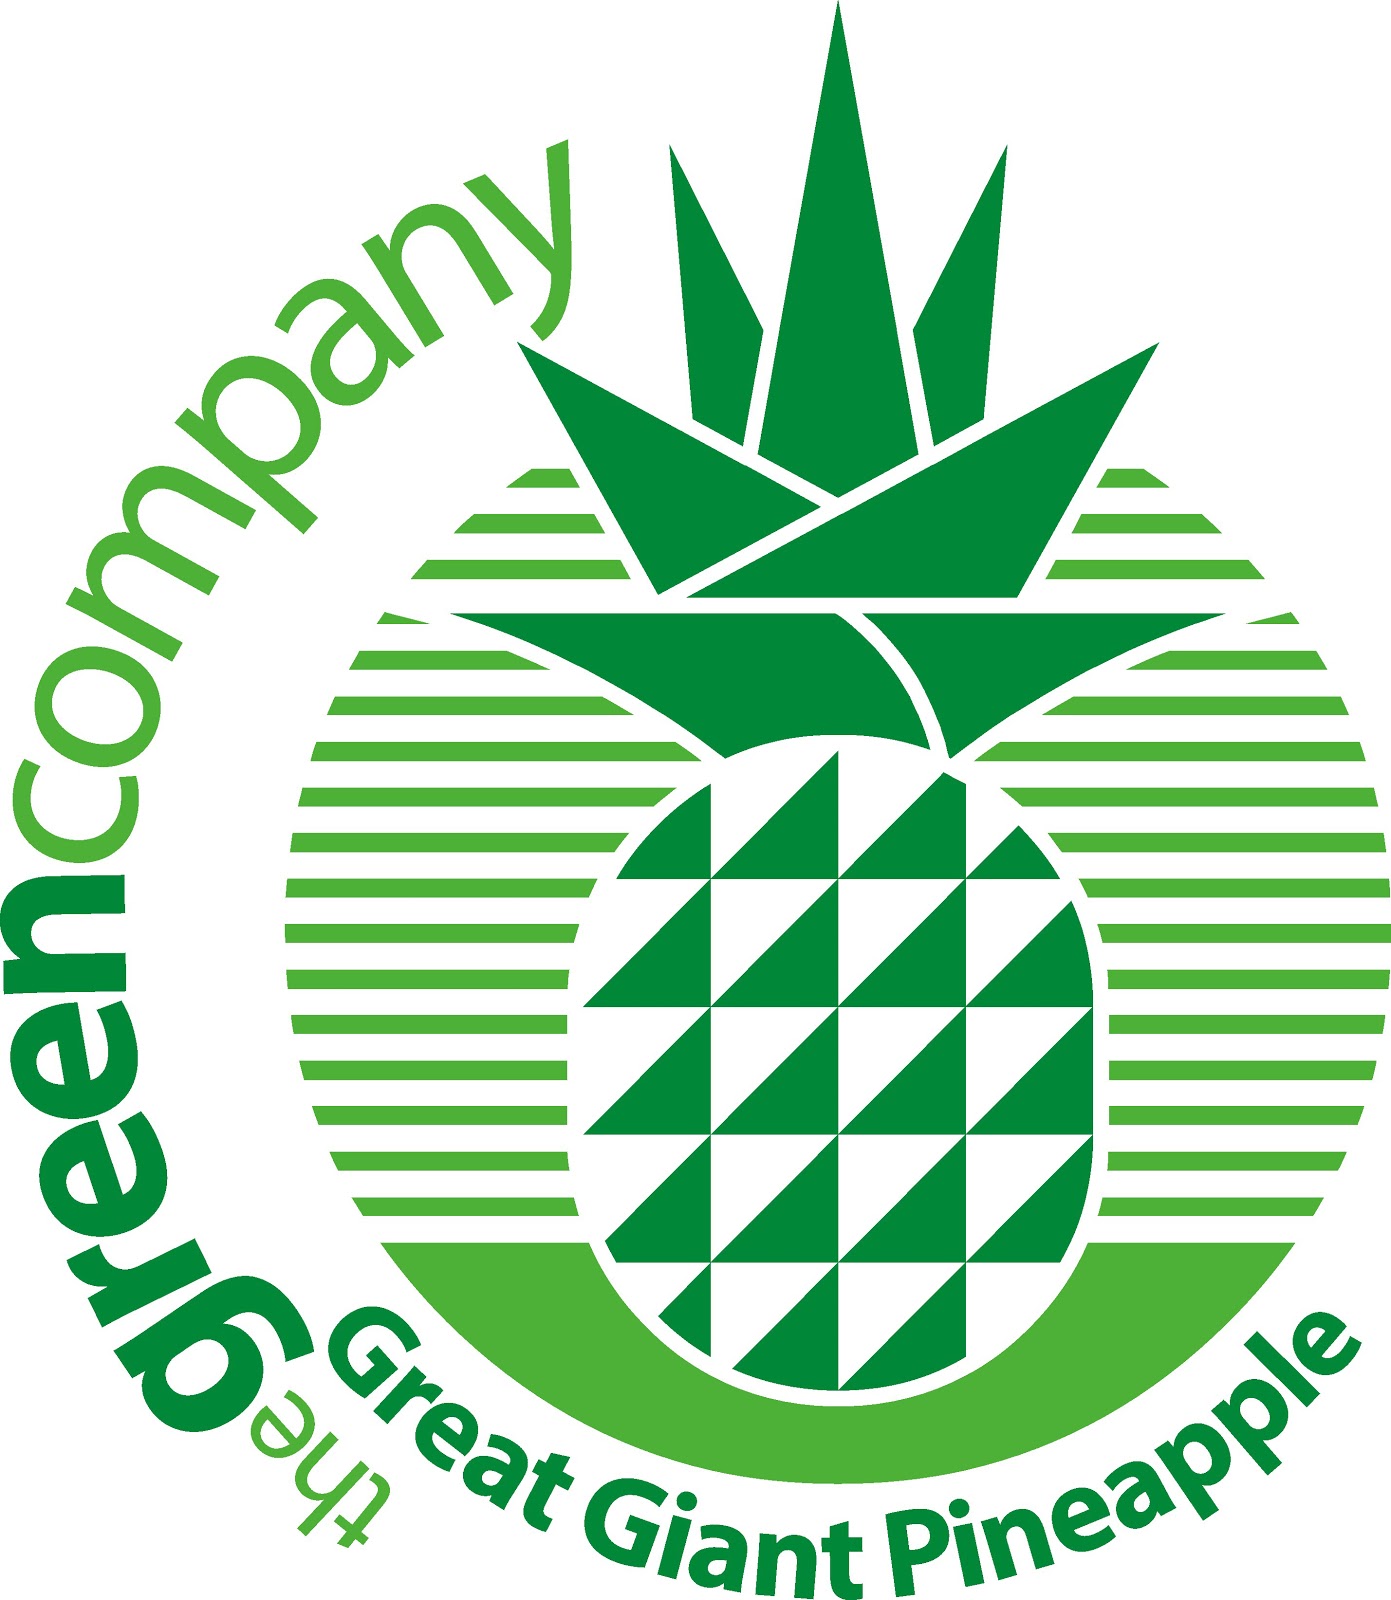 KAGAMA Agri Group Lampung: Great Giant Pineapple